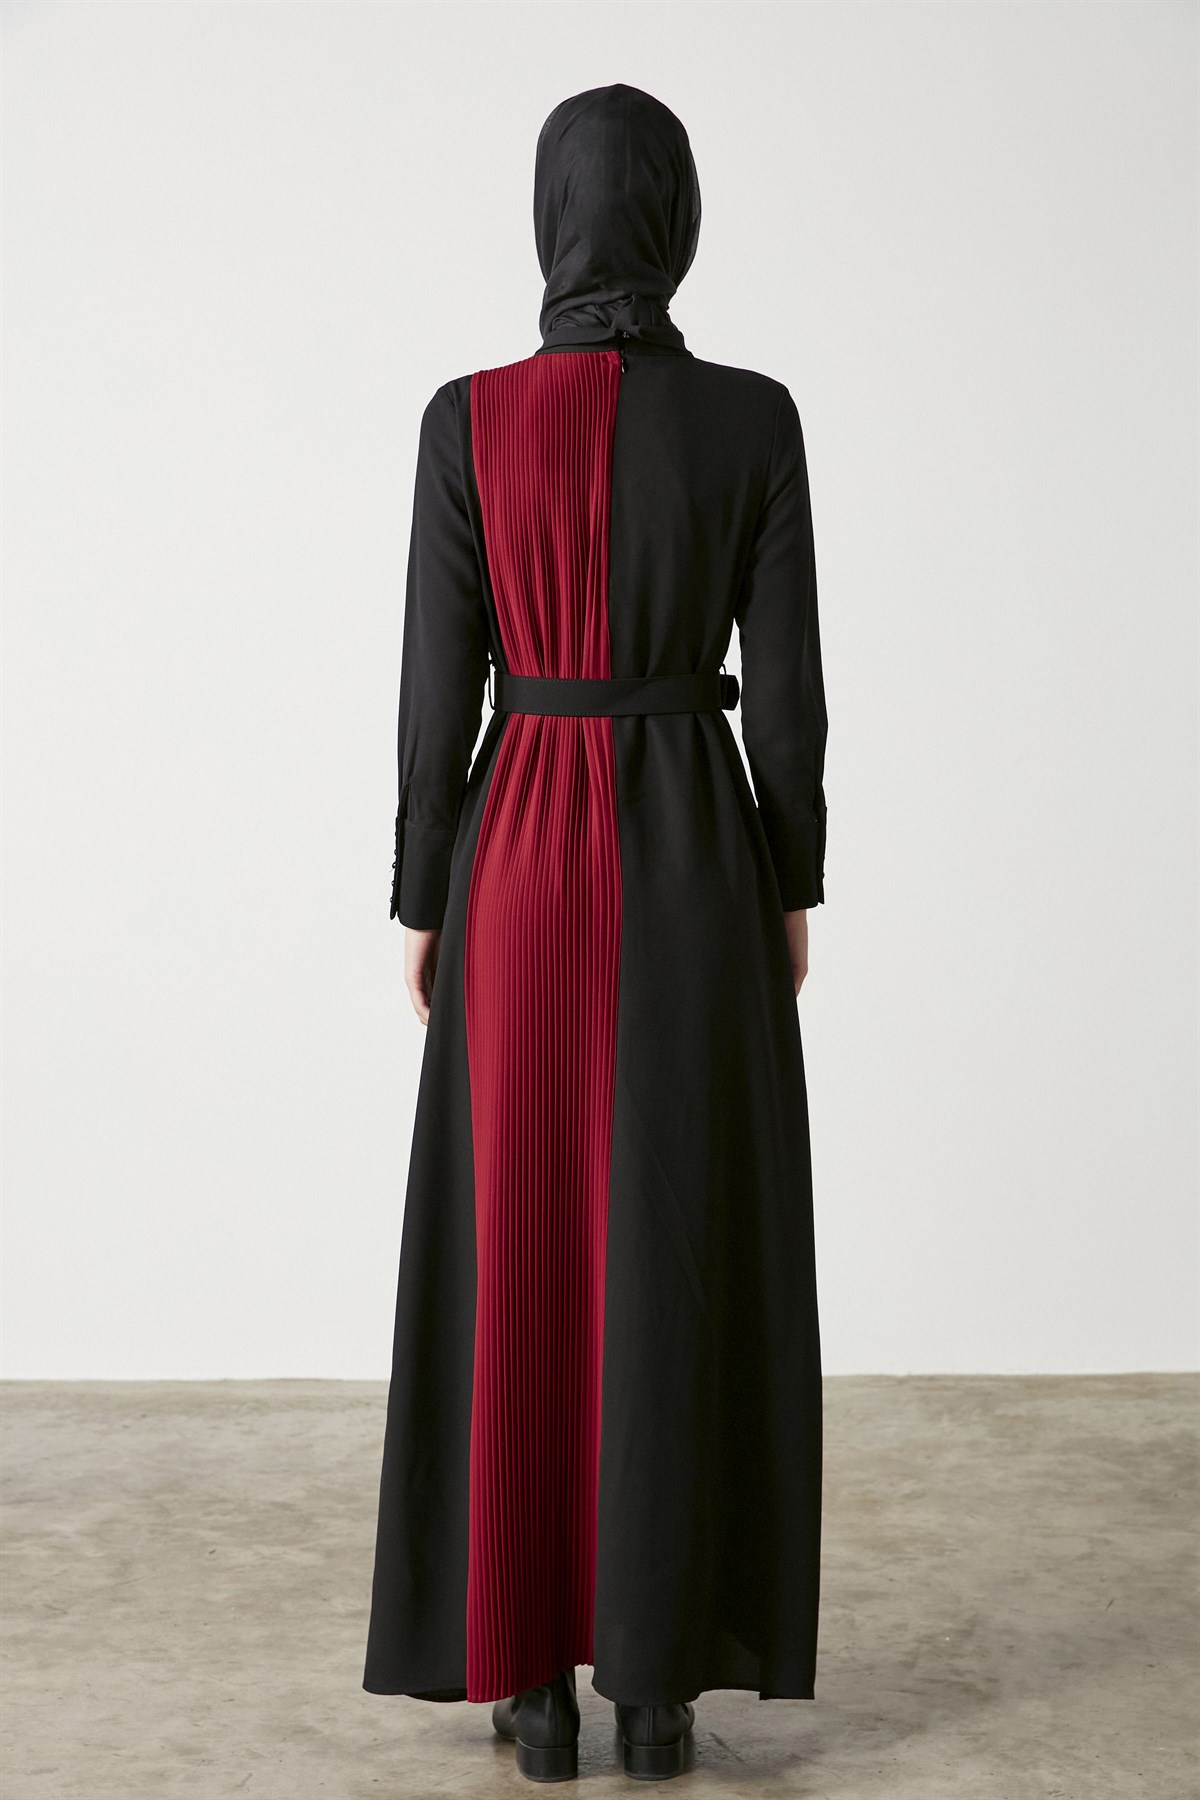 Tuğba Çift Renk Pileli Elbise - Siyah-Bordo